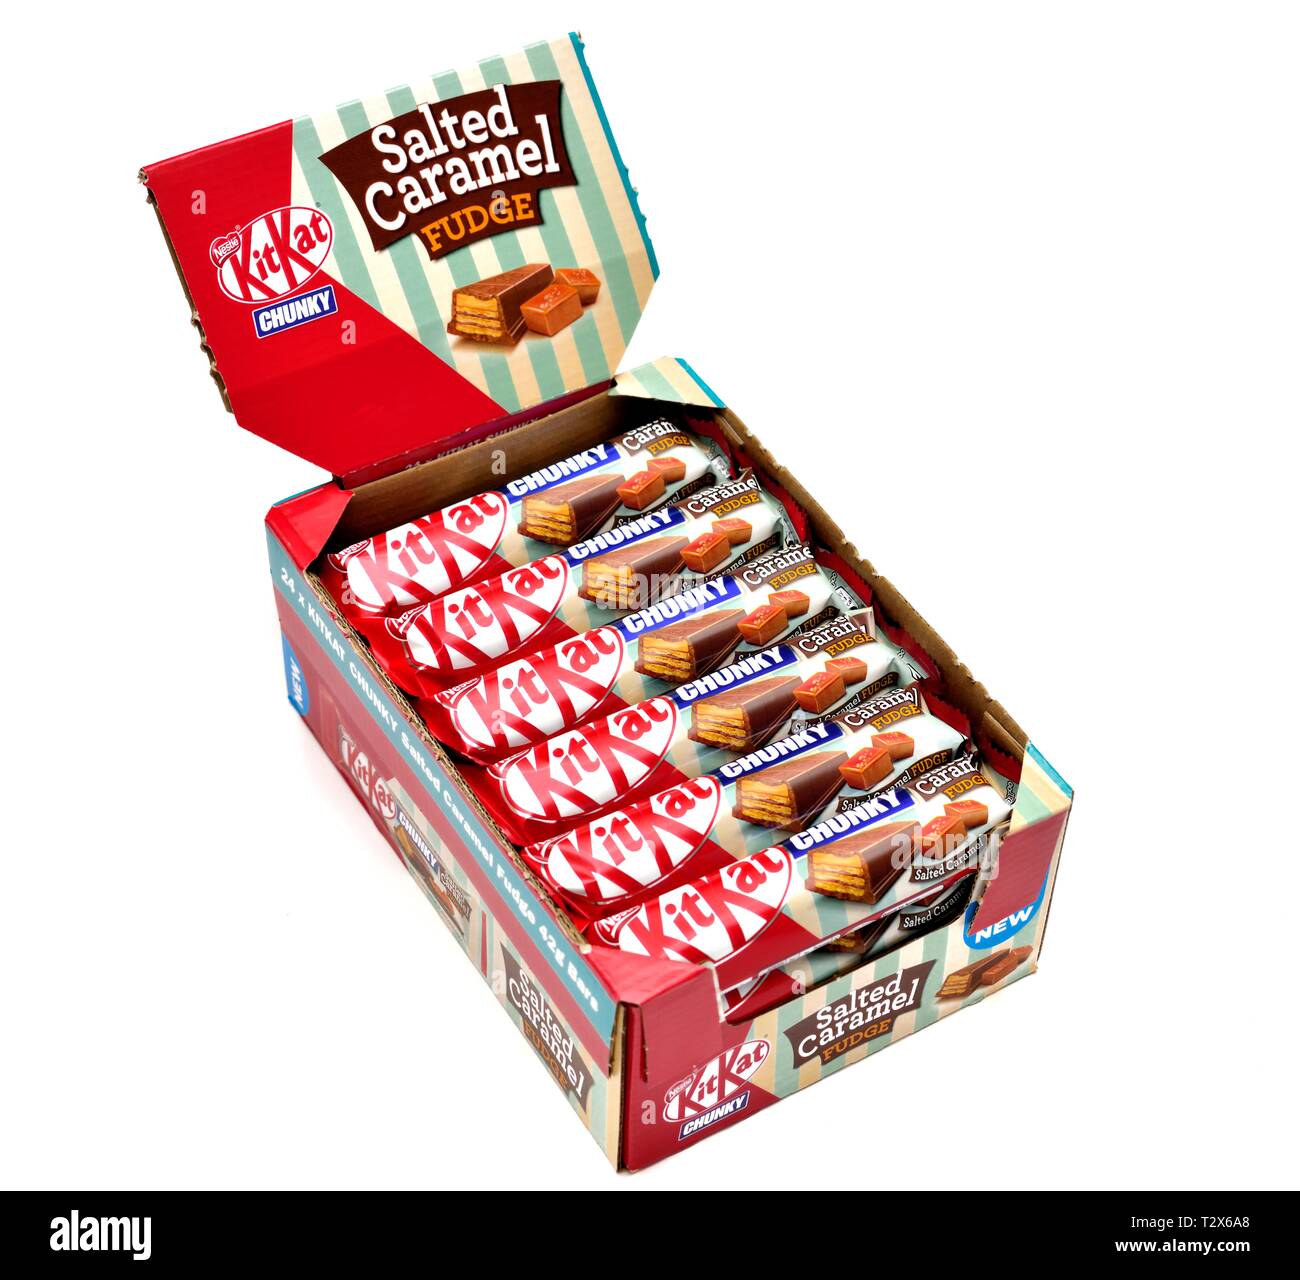 Kitkat Chunky,Salati Caramel fudge,24 pack. Foto Stock